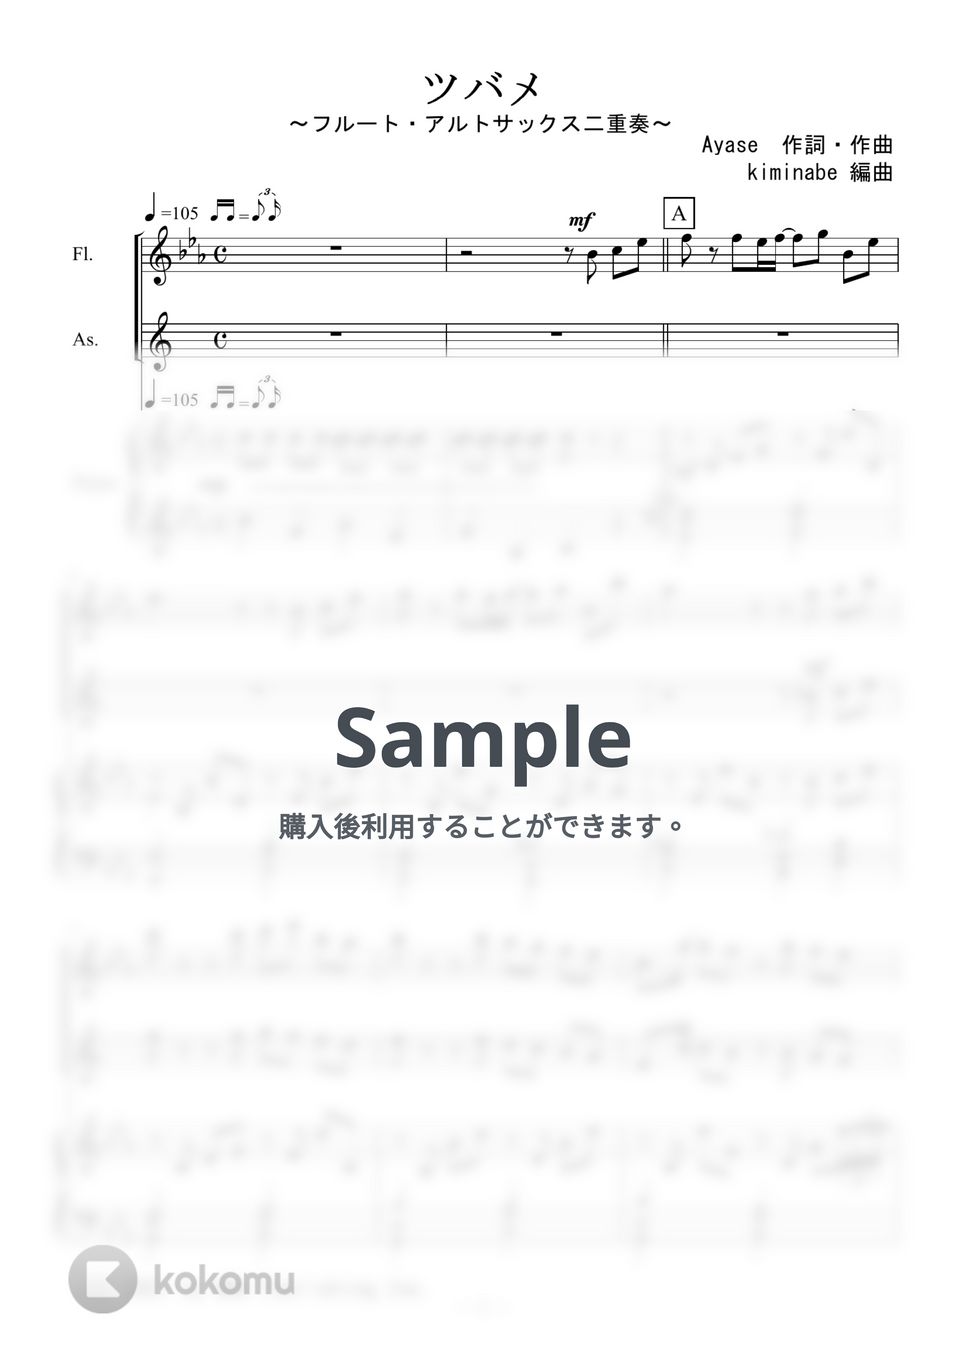 YOASOBI - ツバメ (フルート・アルトサックス二重奏) by kiminabe